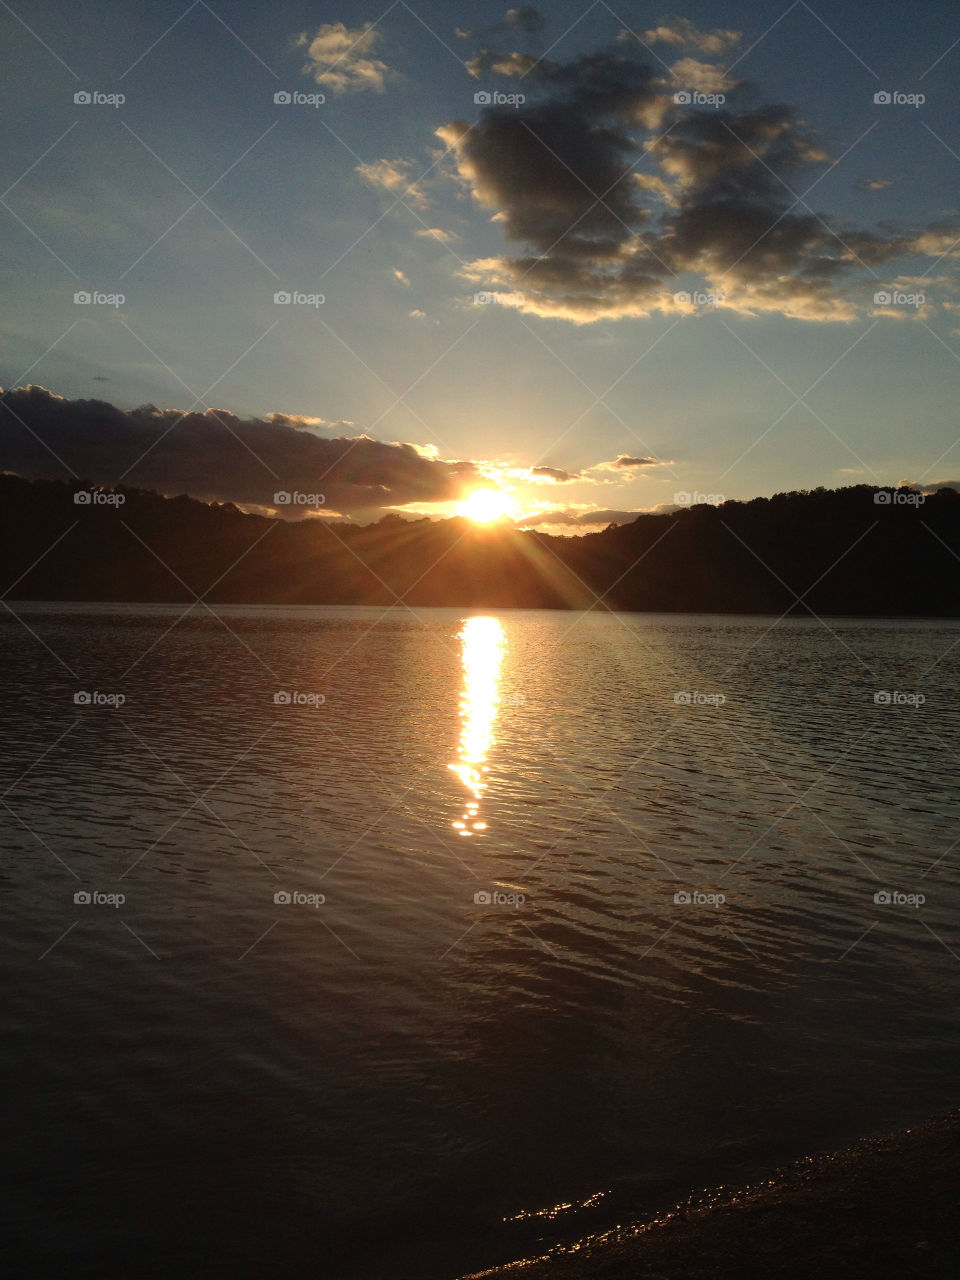 sky summer sunset lake by nzd615